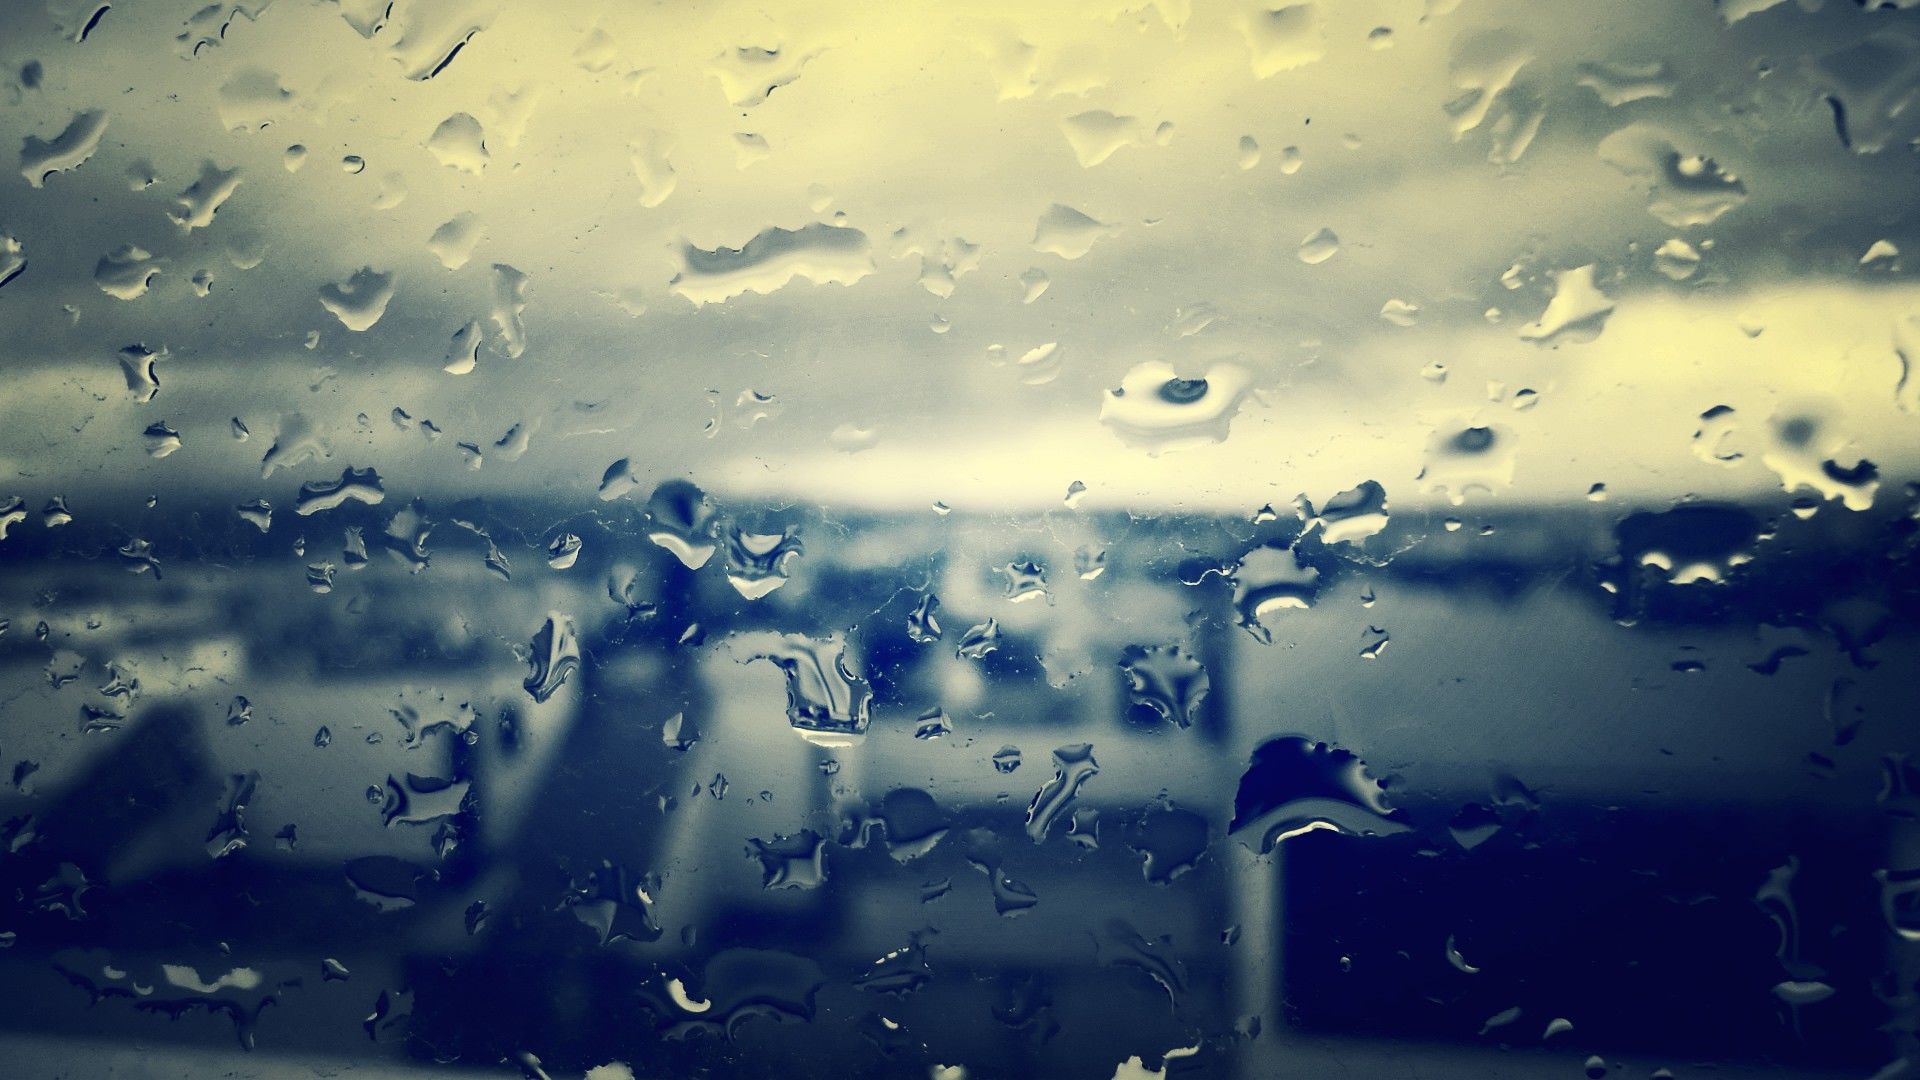 7,000+ Free Raindrops & Rain Images - Pixabay